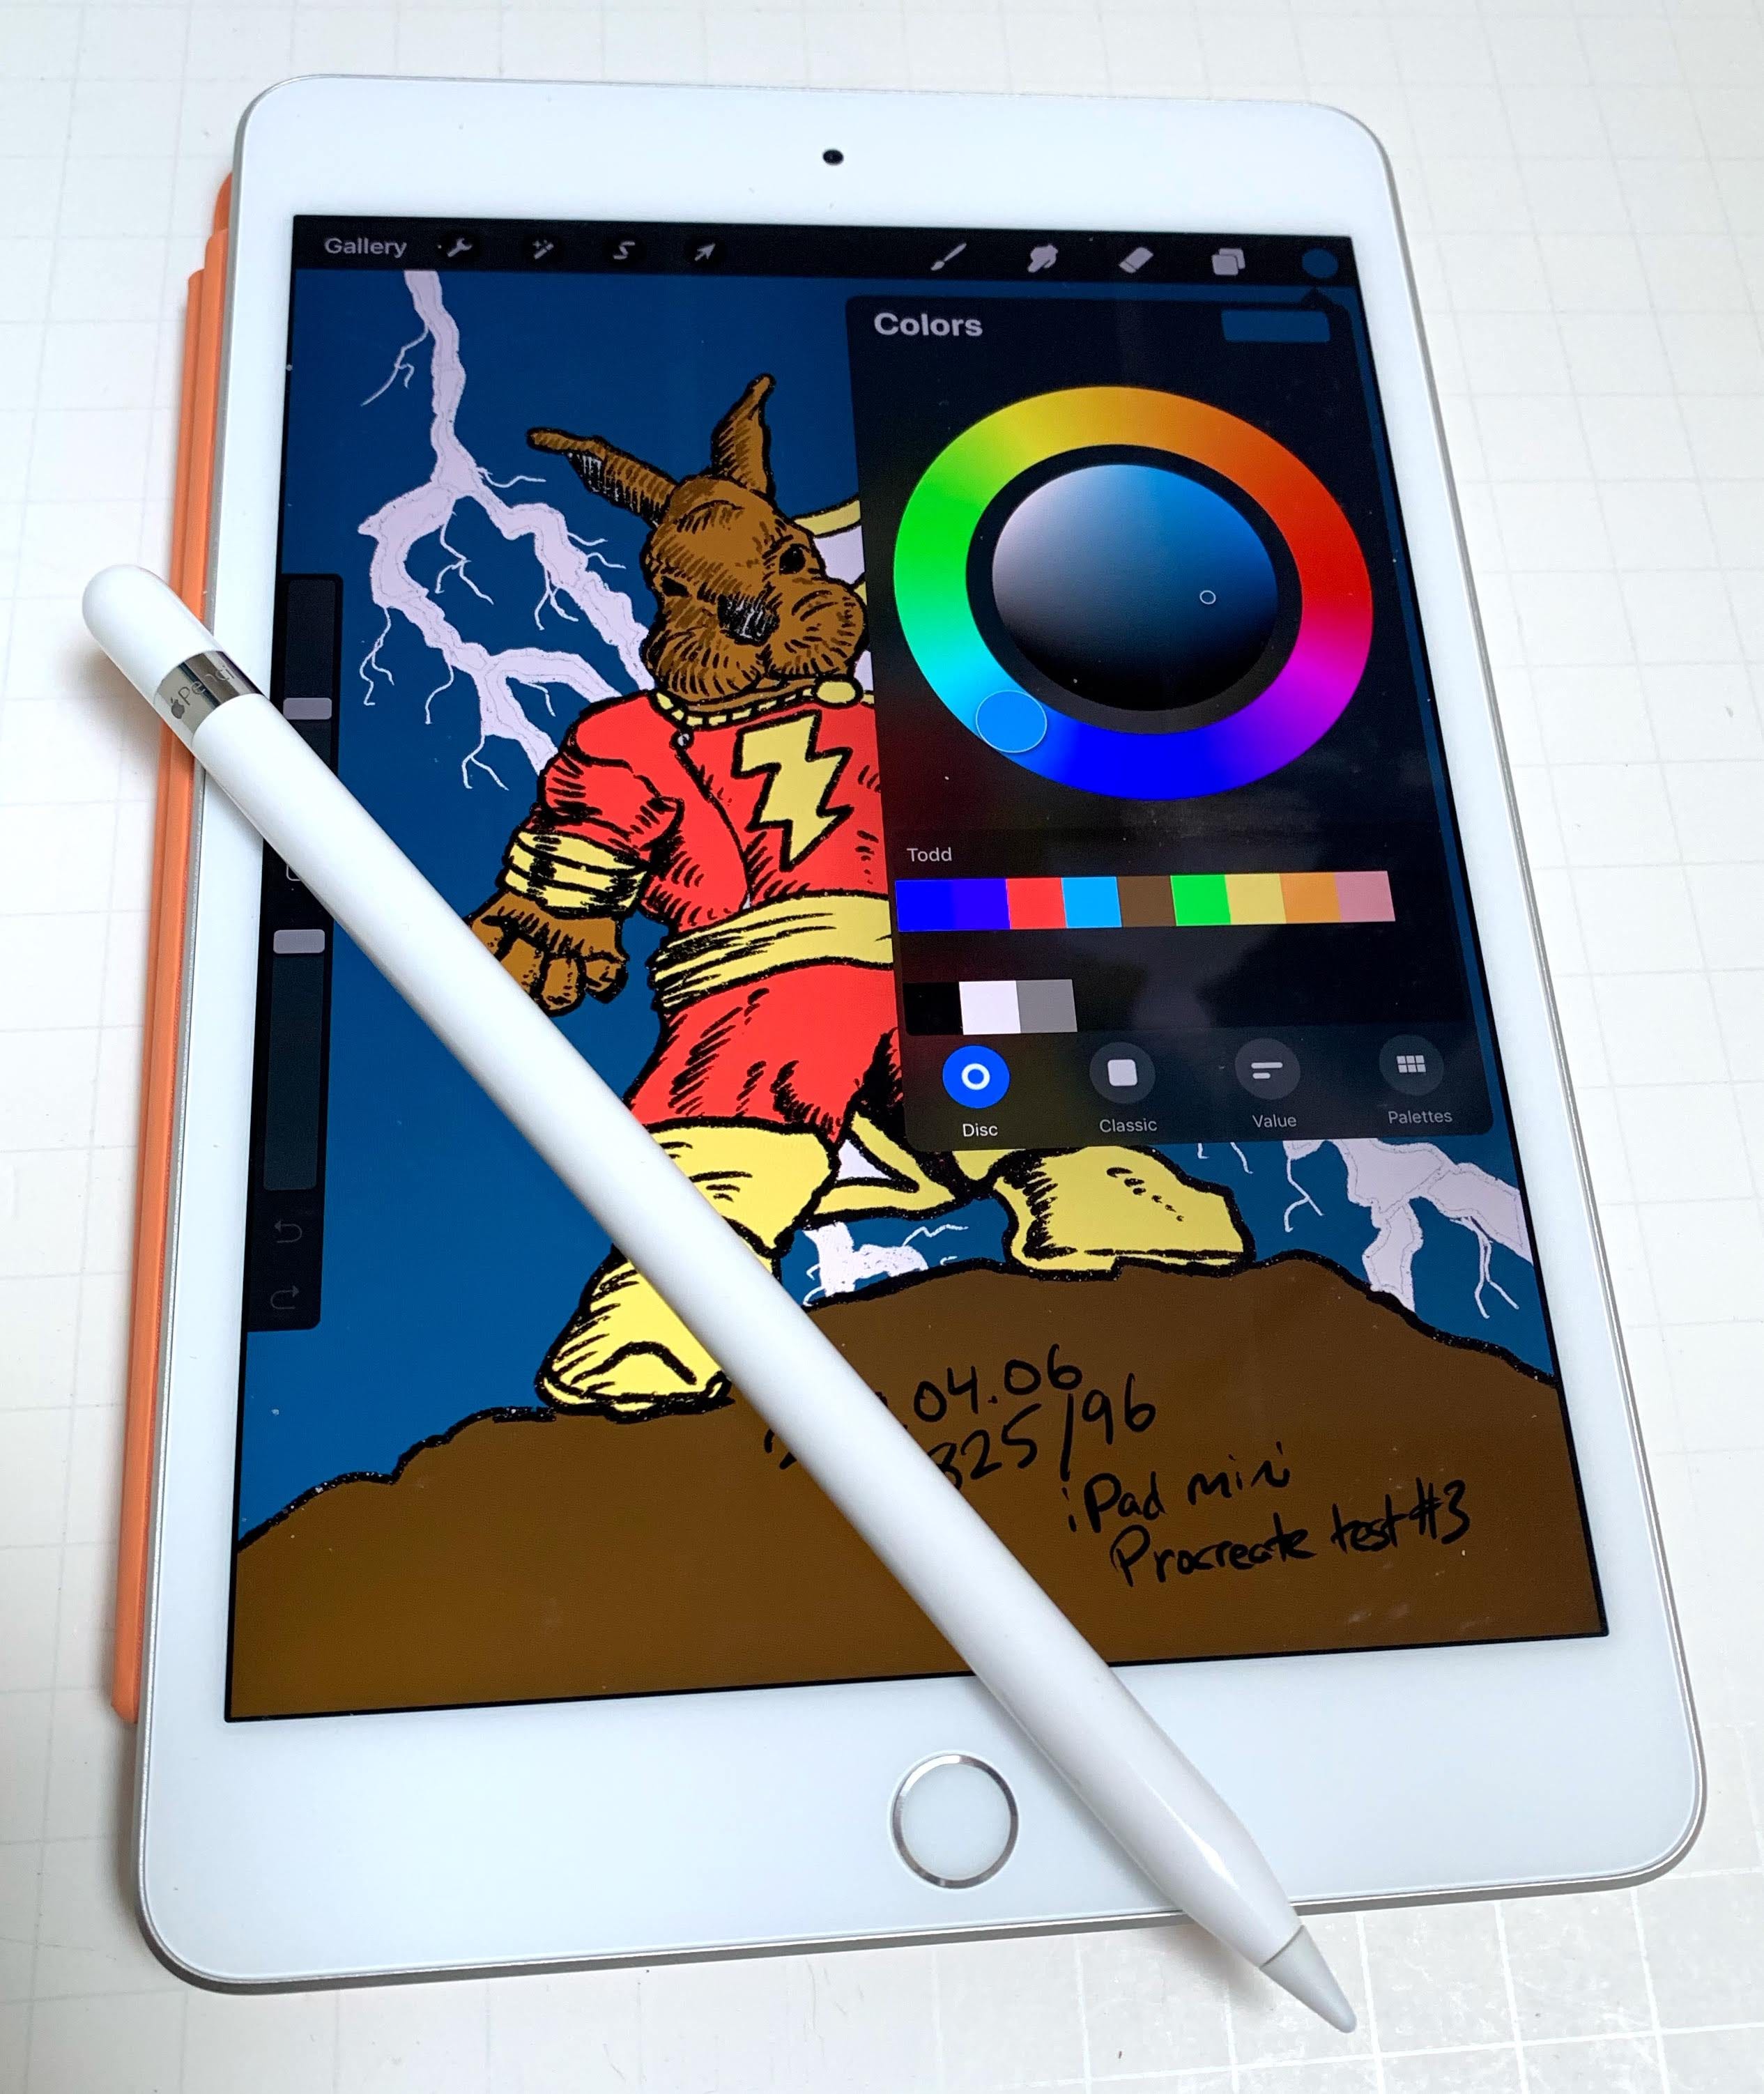 Doodling On A 19 Ipad Mini Using A 1st Gen Apple Pencil And Procreate By Toddogasawara Ogasawalrus Medium